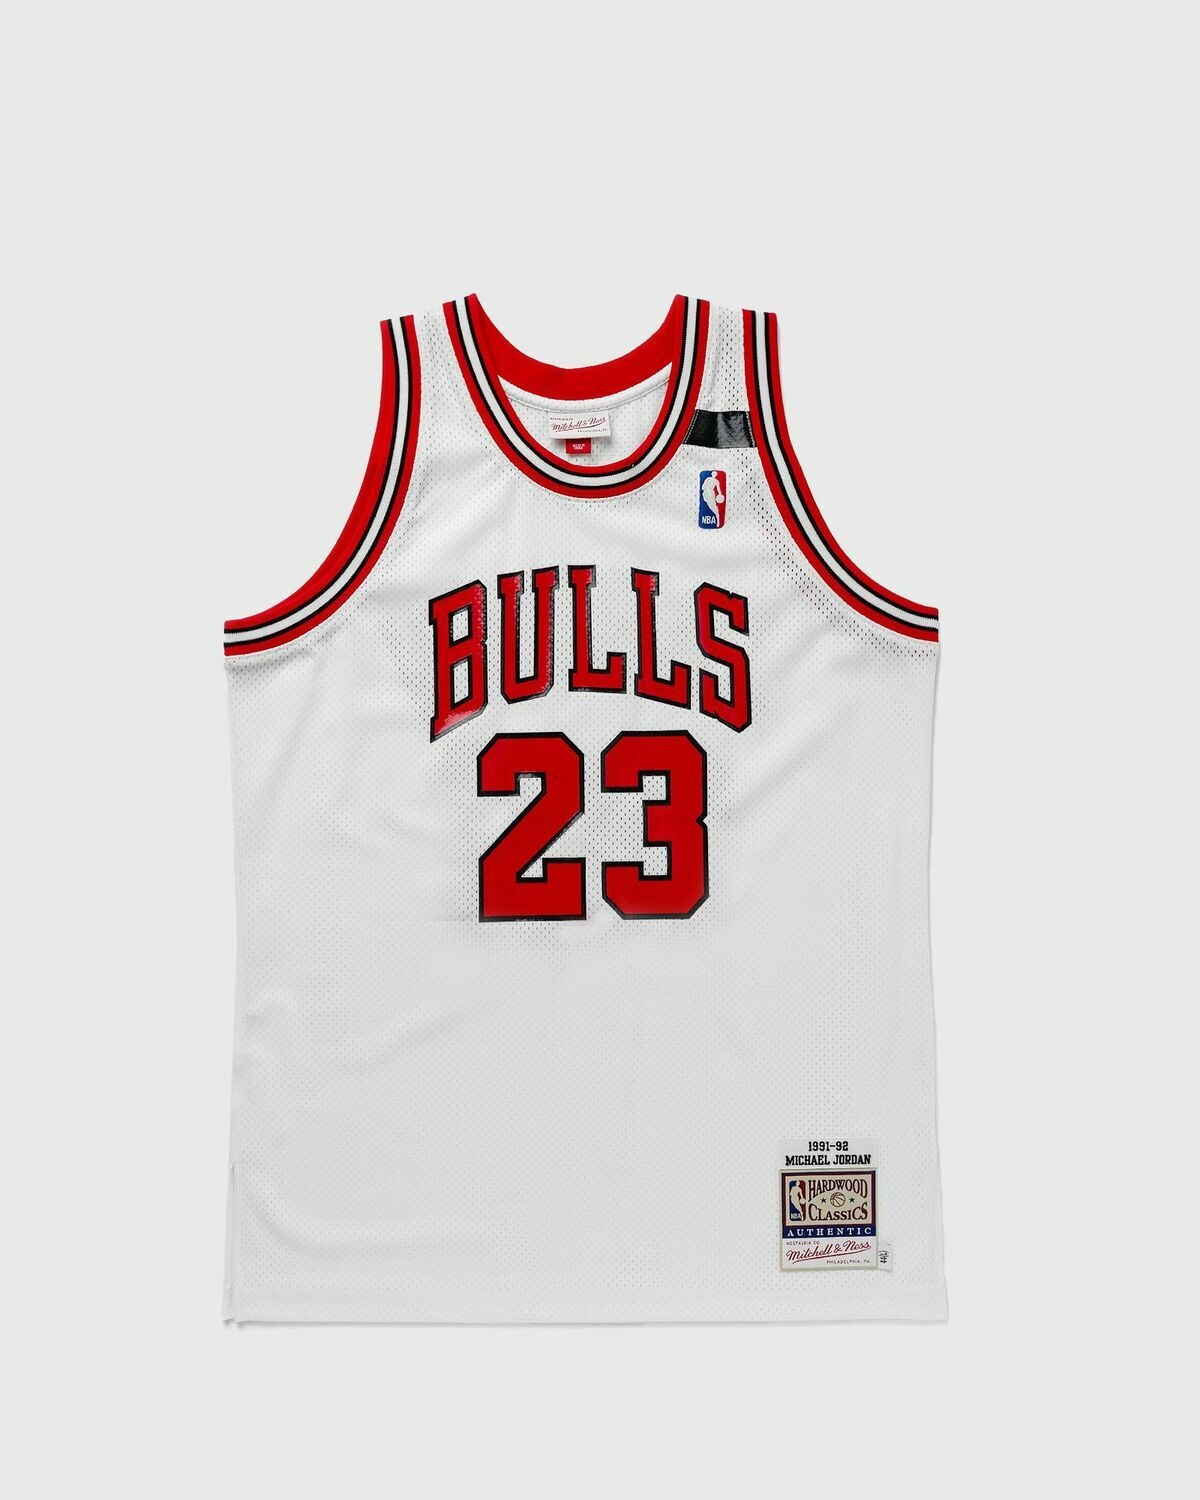 Mitchell & Ness Nba Authentic Jersey Chicago Bulls 1991 92 Michael Jordan #23 White - Mens - Jerseys